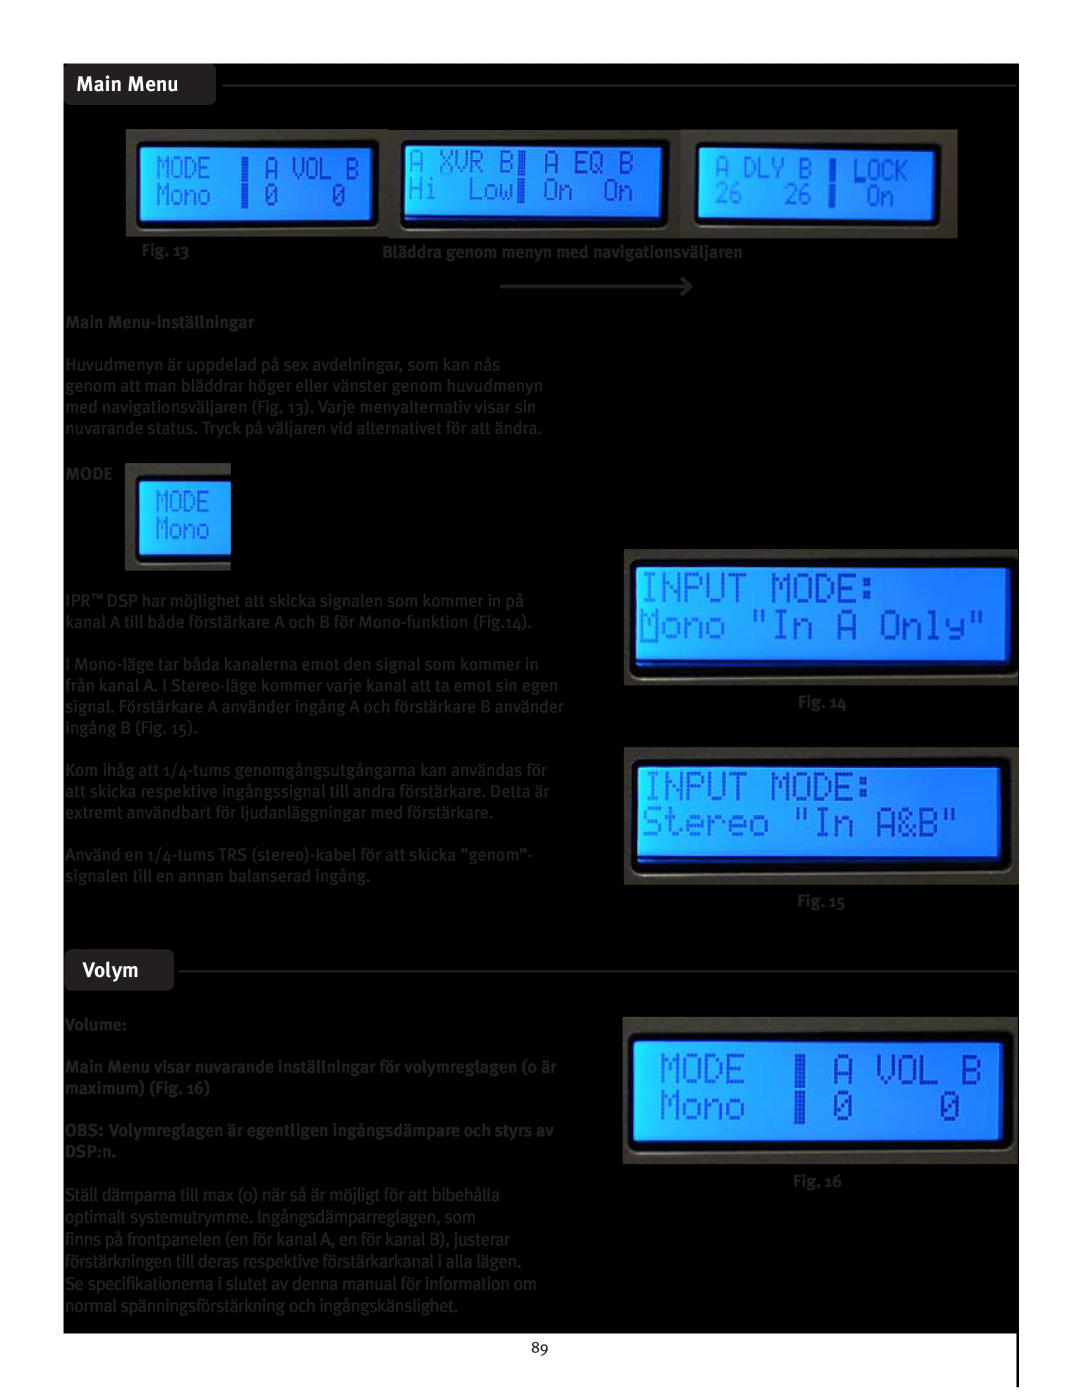 Peavey IPR 6000, IPR 3000, IPR 4500, IPR 1600 manual Volym, Main Menu-inställningar, Mode, Volume 